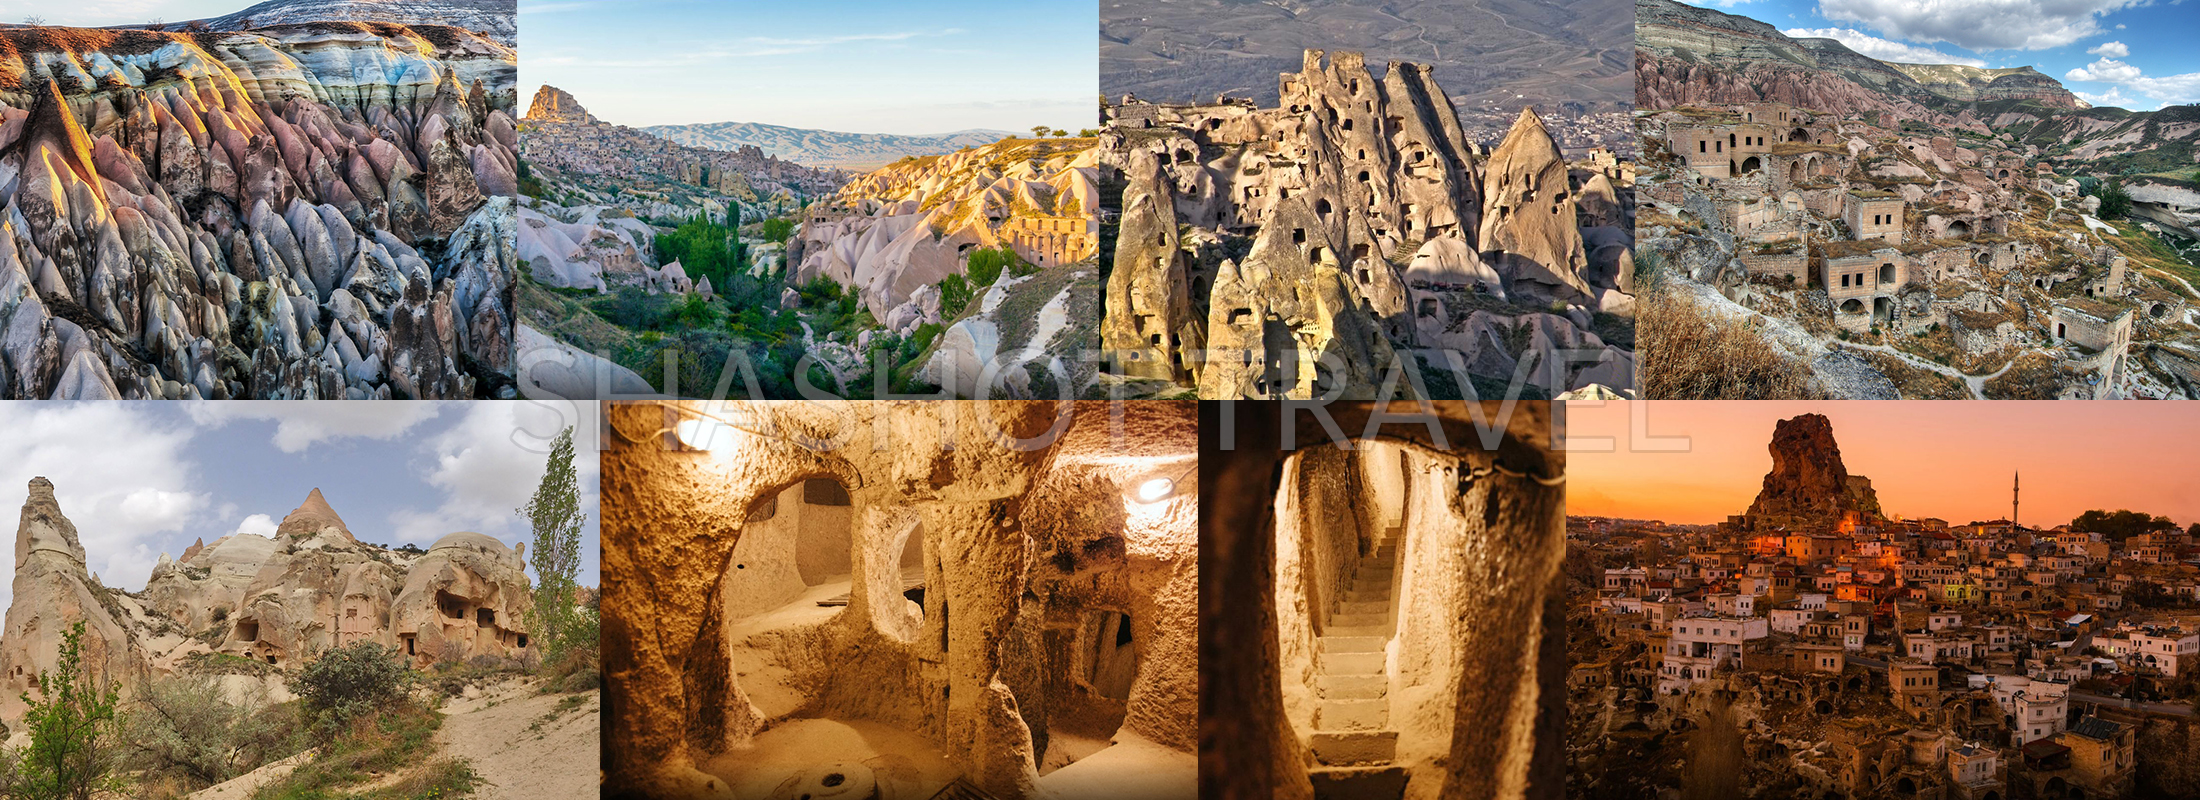 cappadocia-turkey-turkiye-shashot-travel-walking-hiking-tour